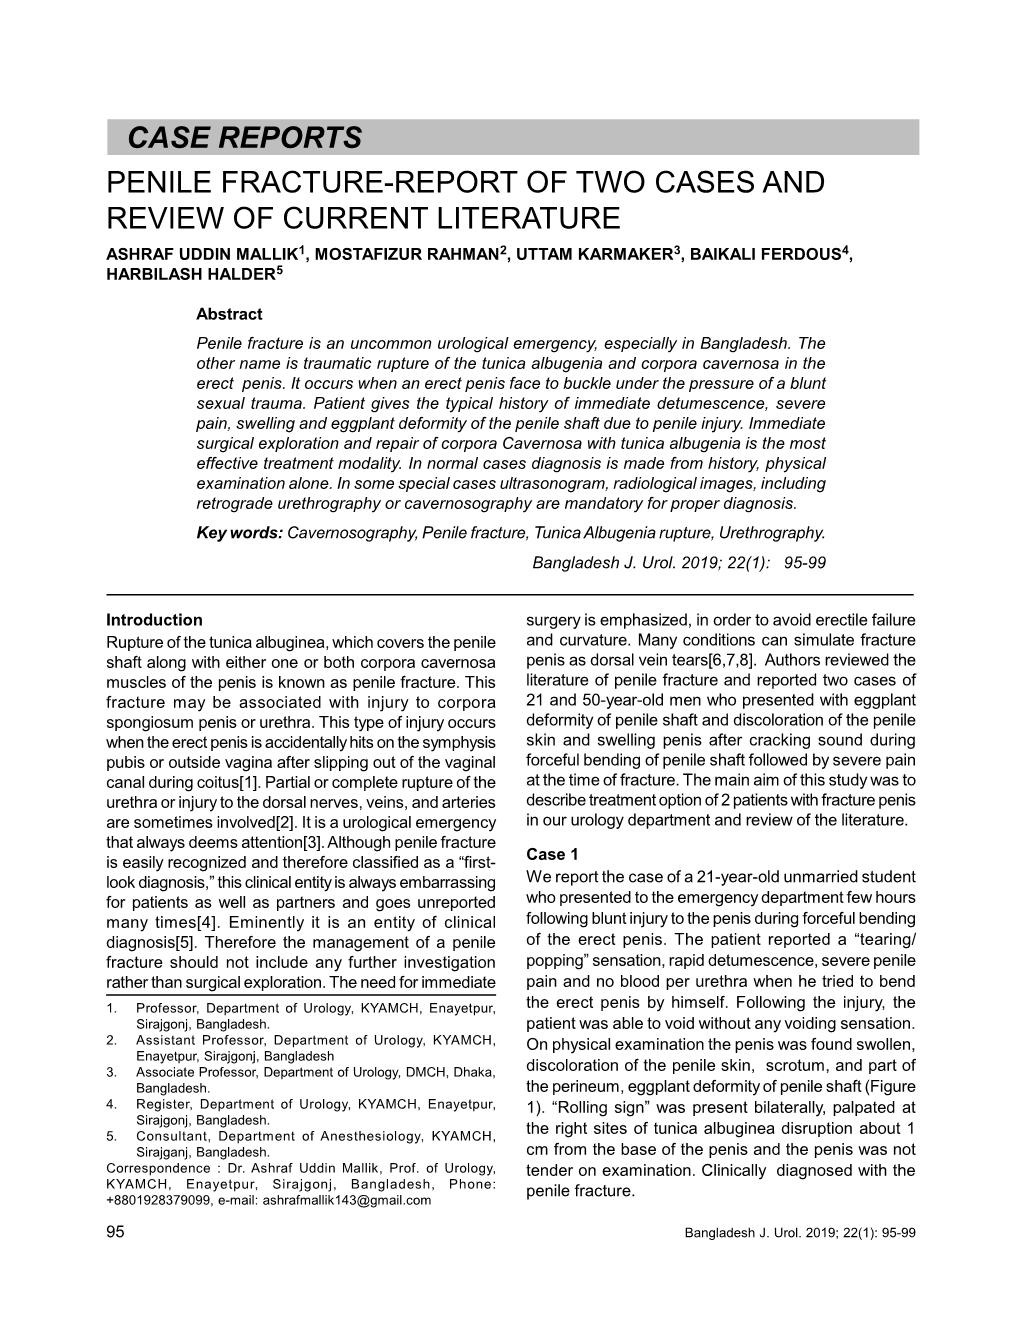 Penile Fracture-Report of Two Cases and Review of Current Literature Ashraf Uddin Mallik1, Mostafizur Rahman2, Uttam Karmaker3, Baikali Ferdous4, Harbilash Halder5